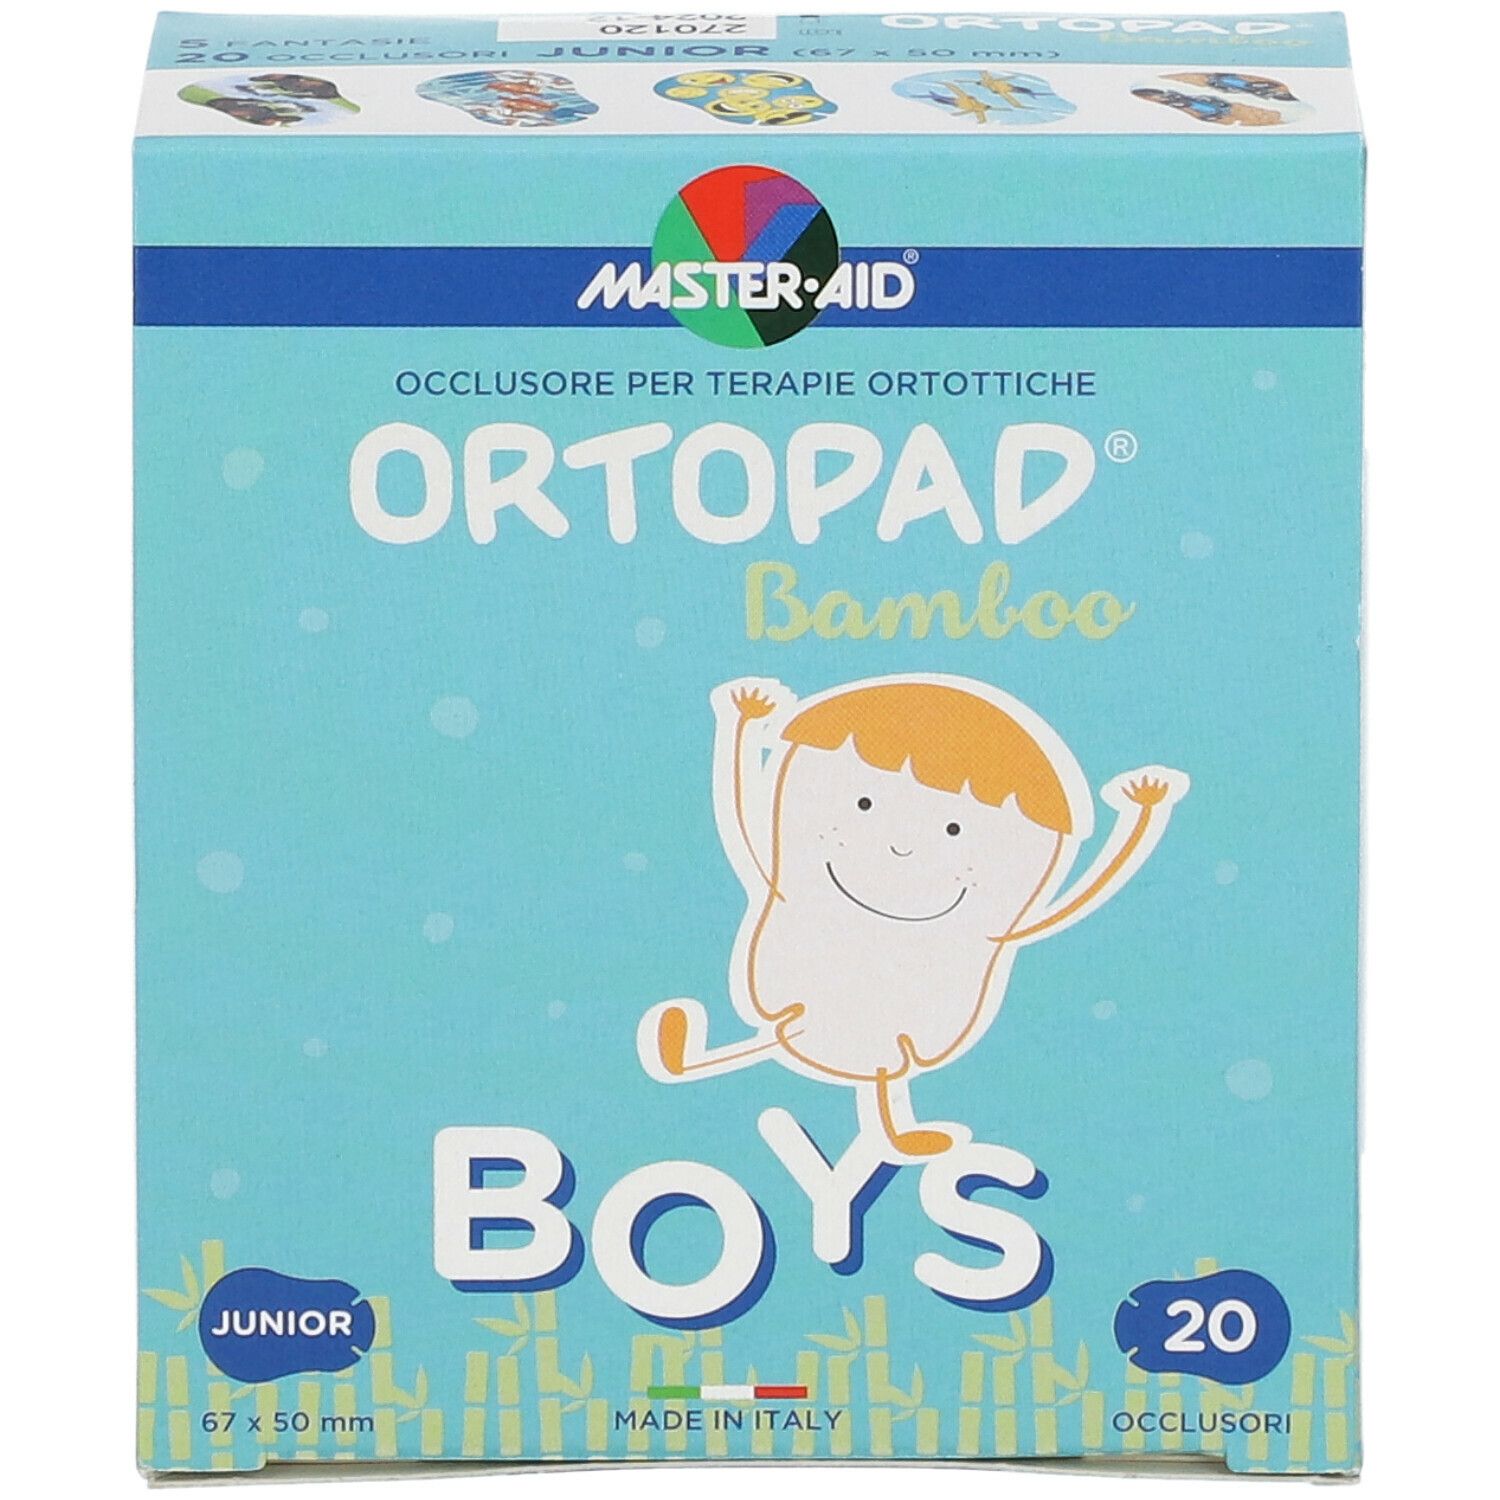 Master-Aid® Ortopad® Bamboo Boys 67 x 50 mm